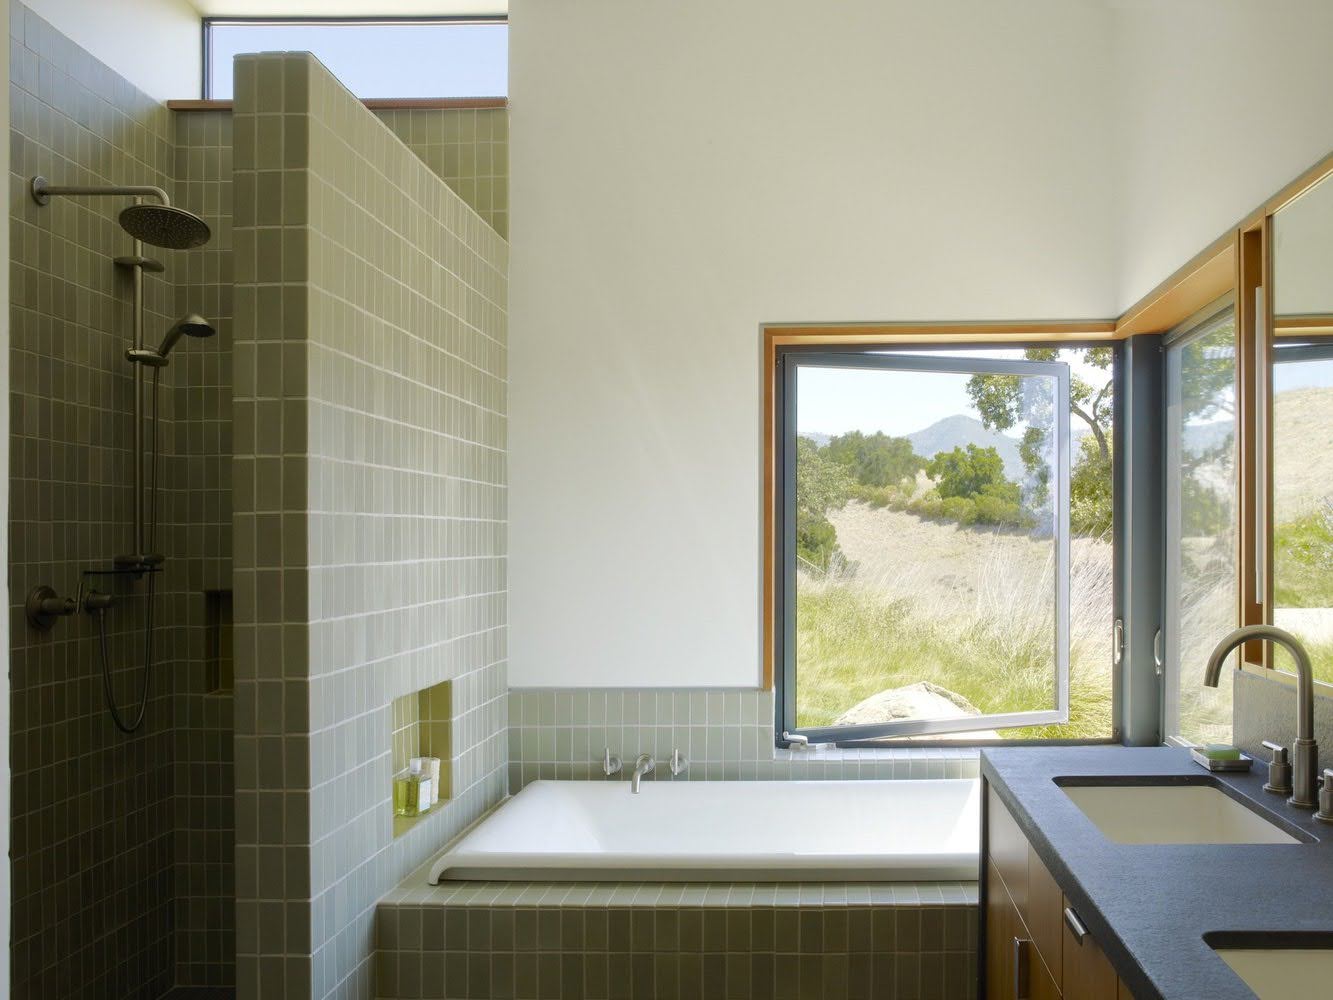 Casa Santa Ynez - Fernau + Hartman Architects